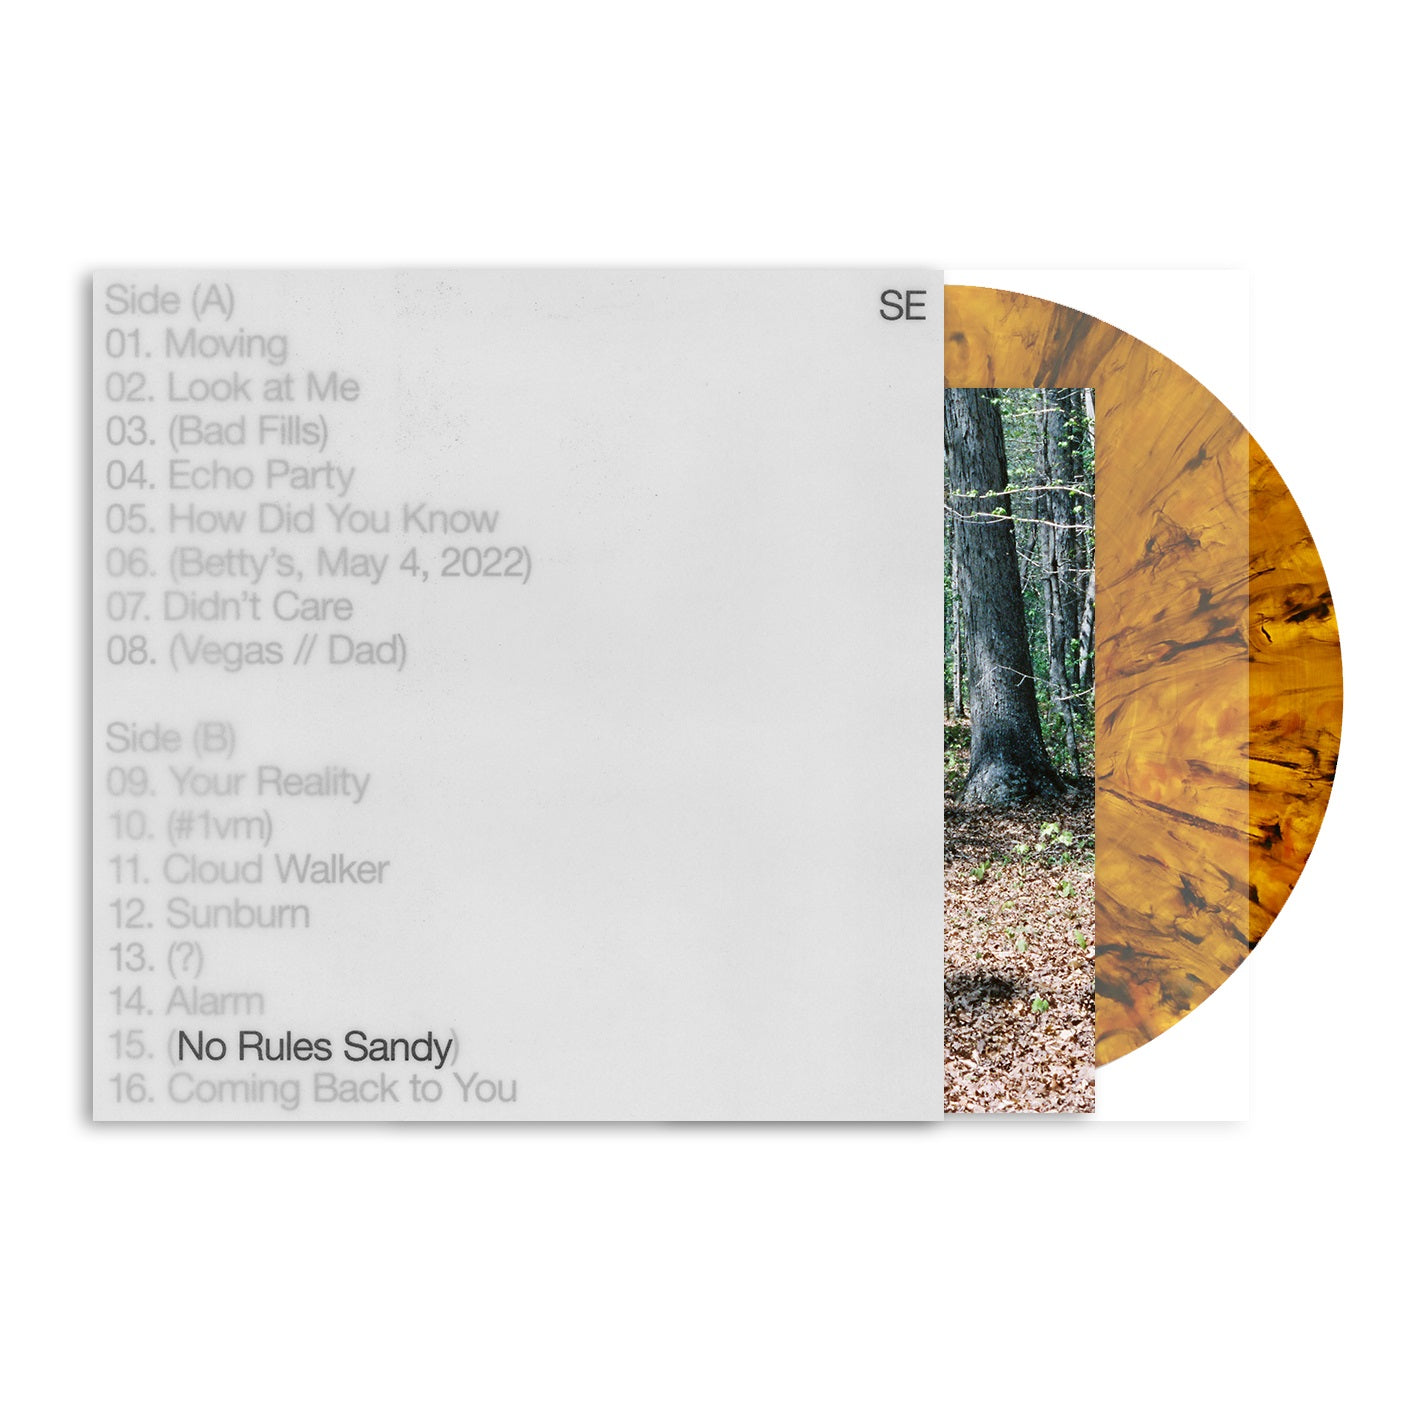 Sylvan Esso - No Rules Sandy (Indie Exclusive, Limited Edition, Colored Vinyl)